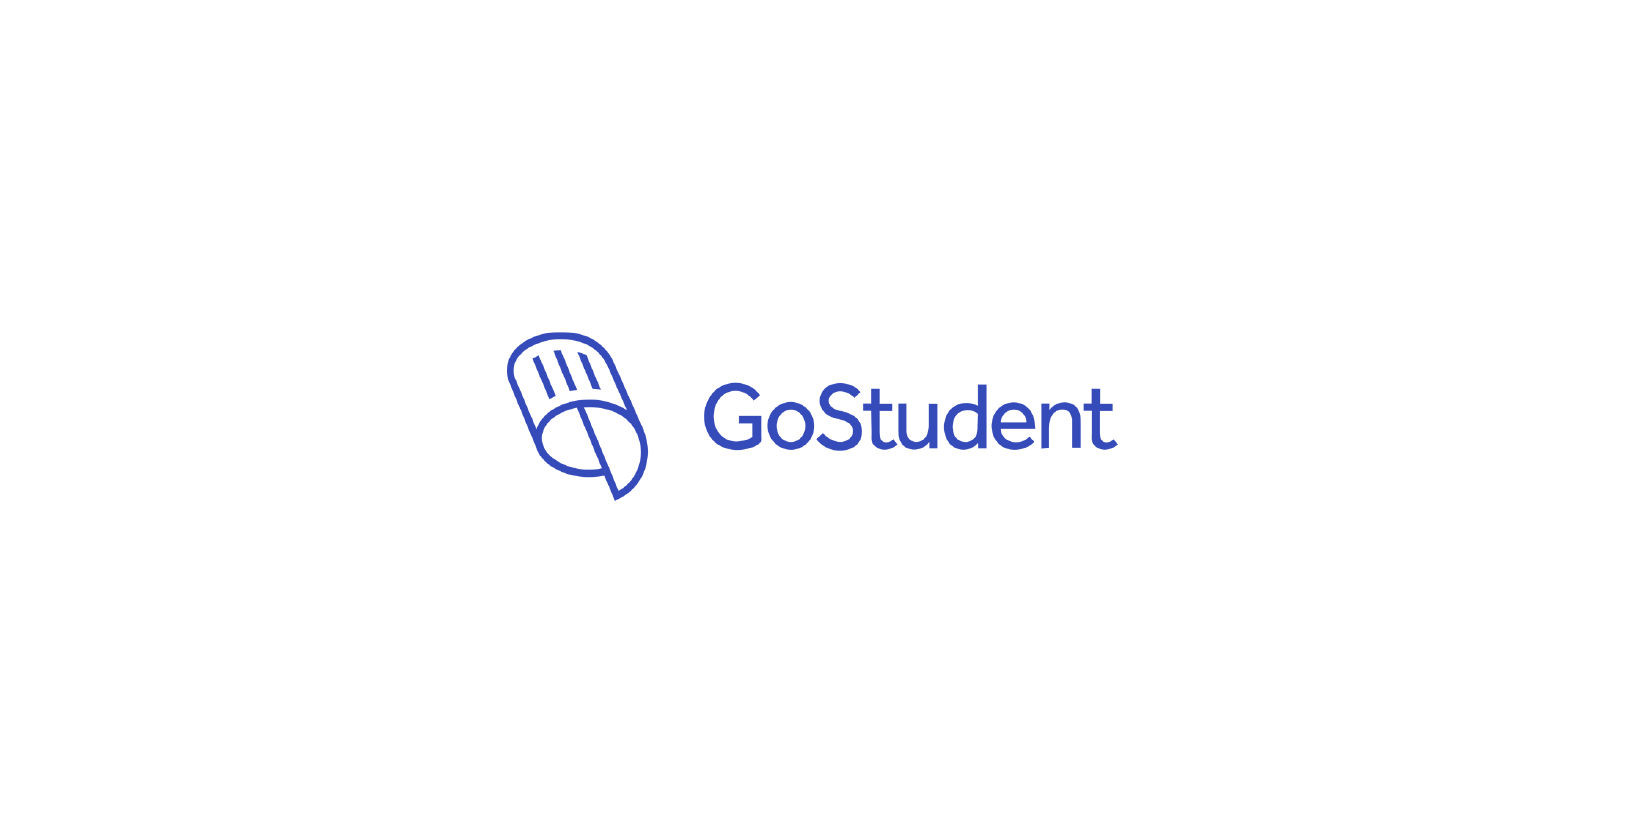 Vision Fund investment portfolio company GoStudent's logo